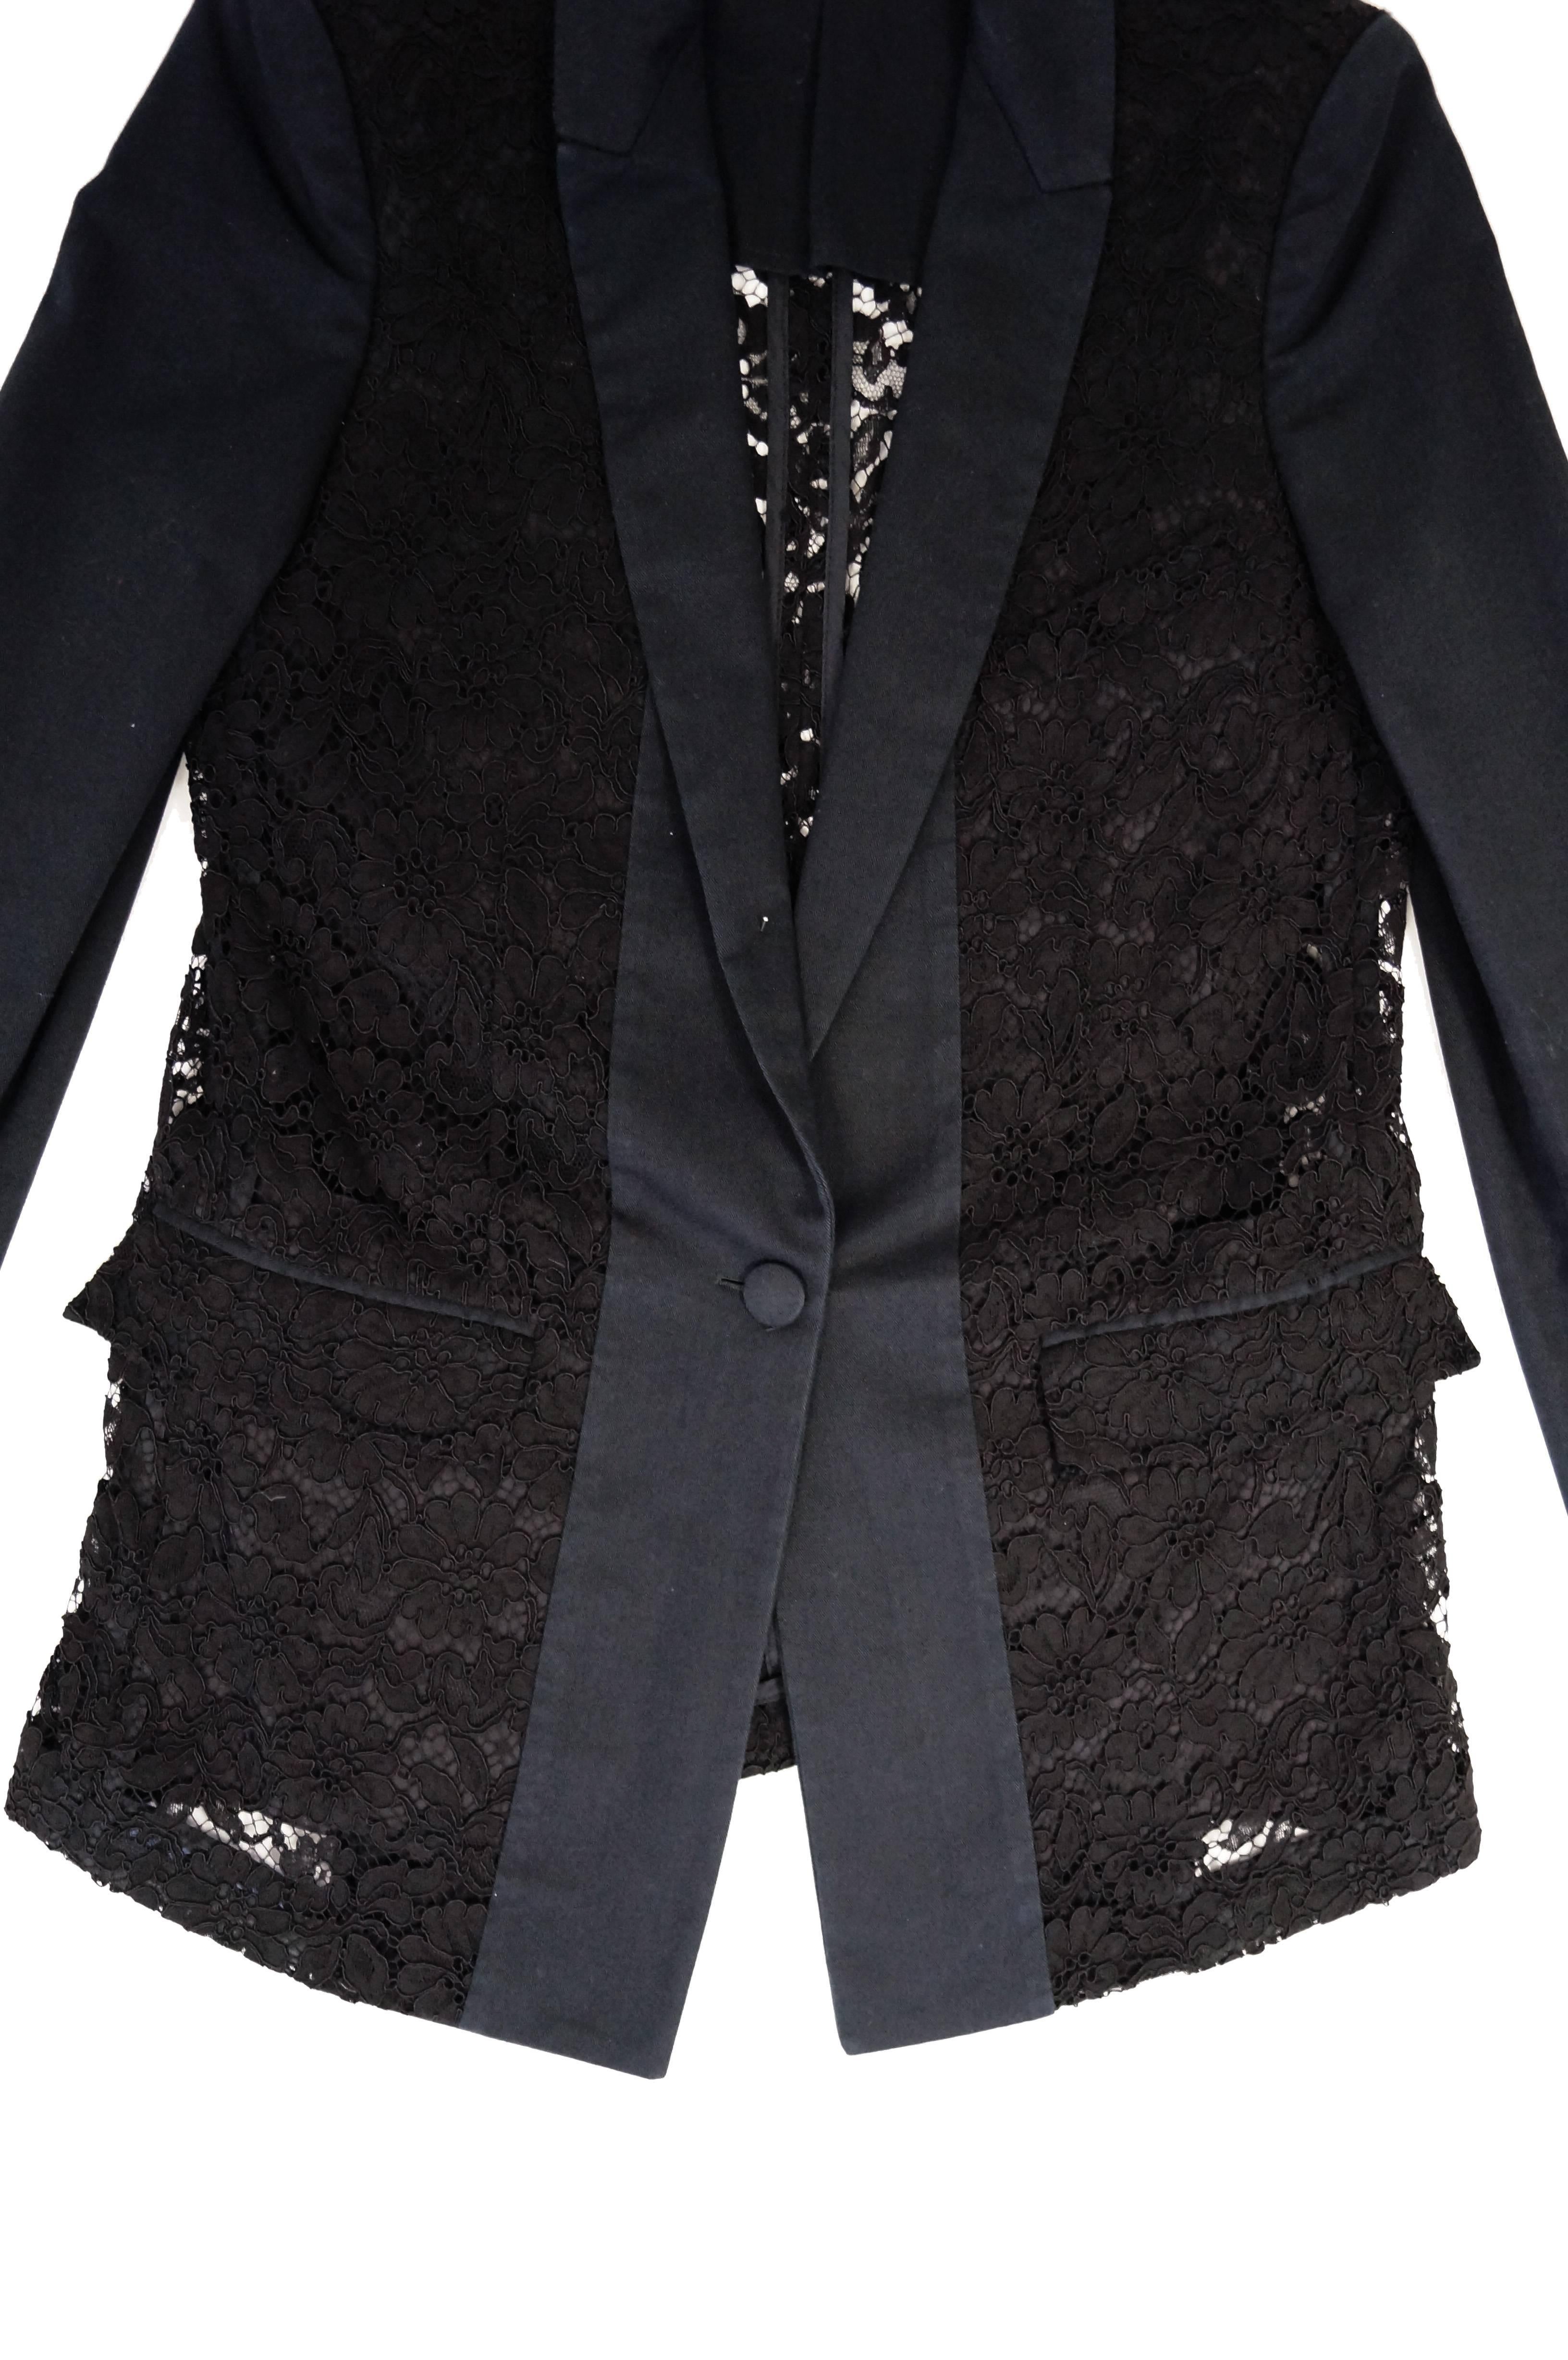 Givenchy Black Floral Lace Back Panel Blazer For Sale 7